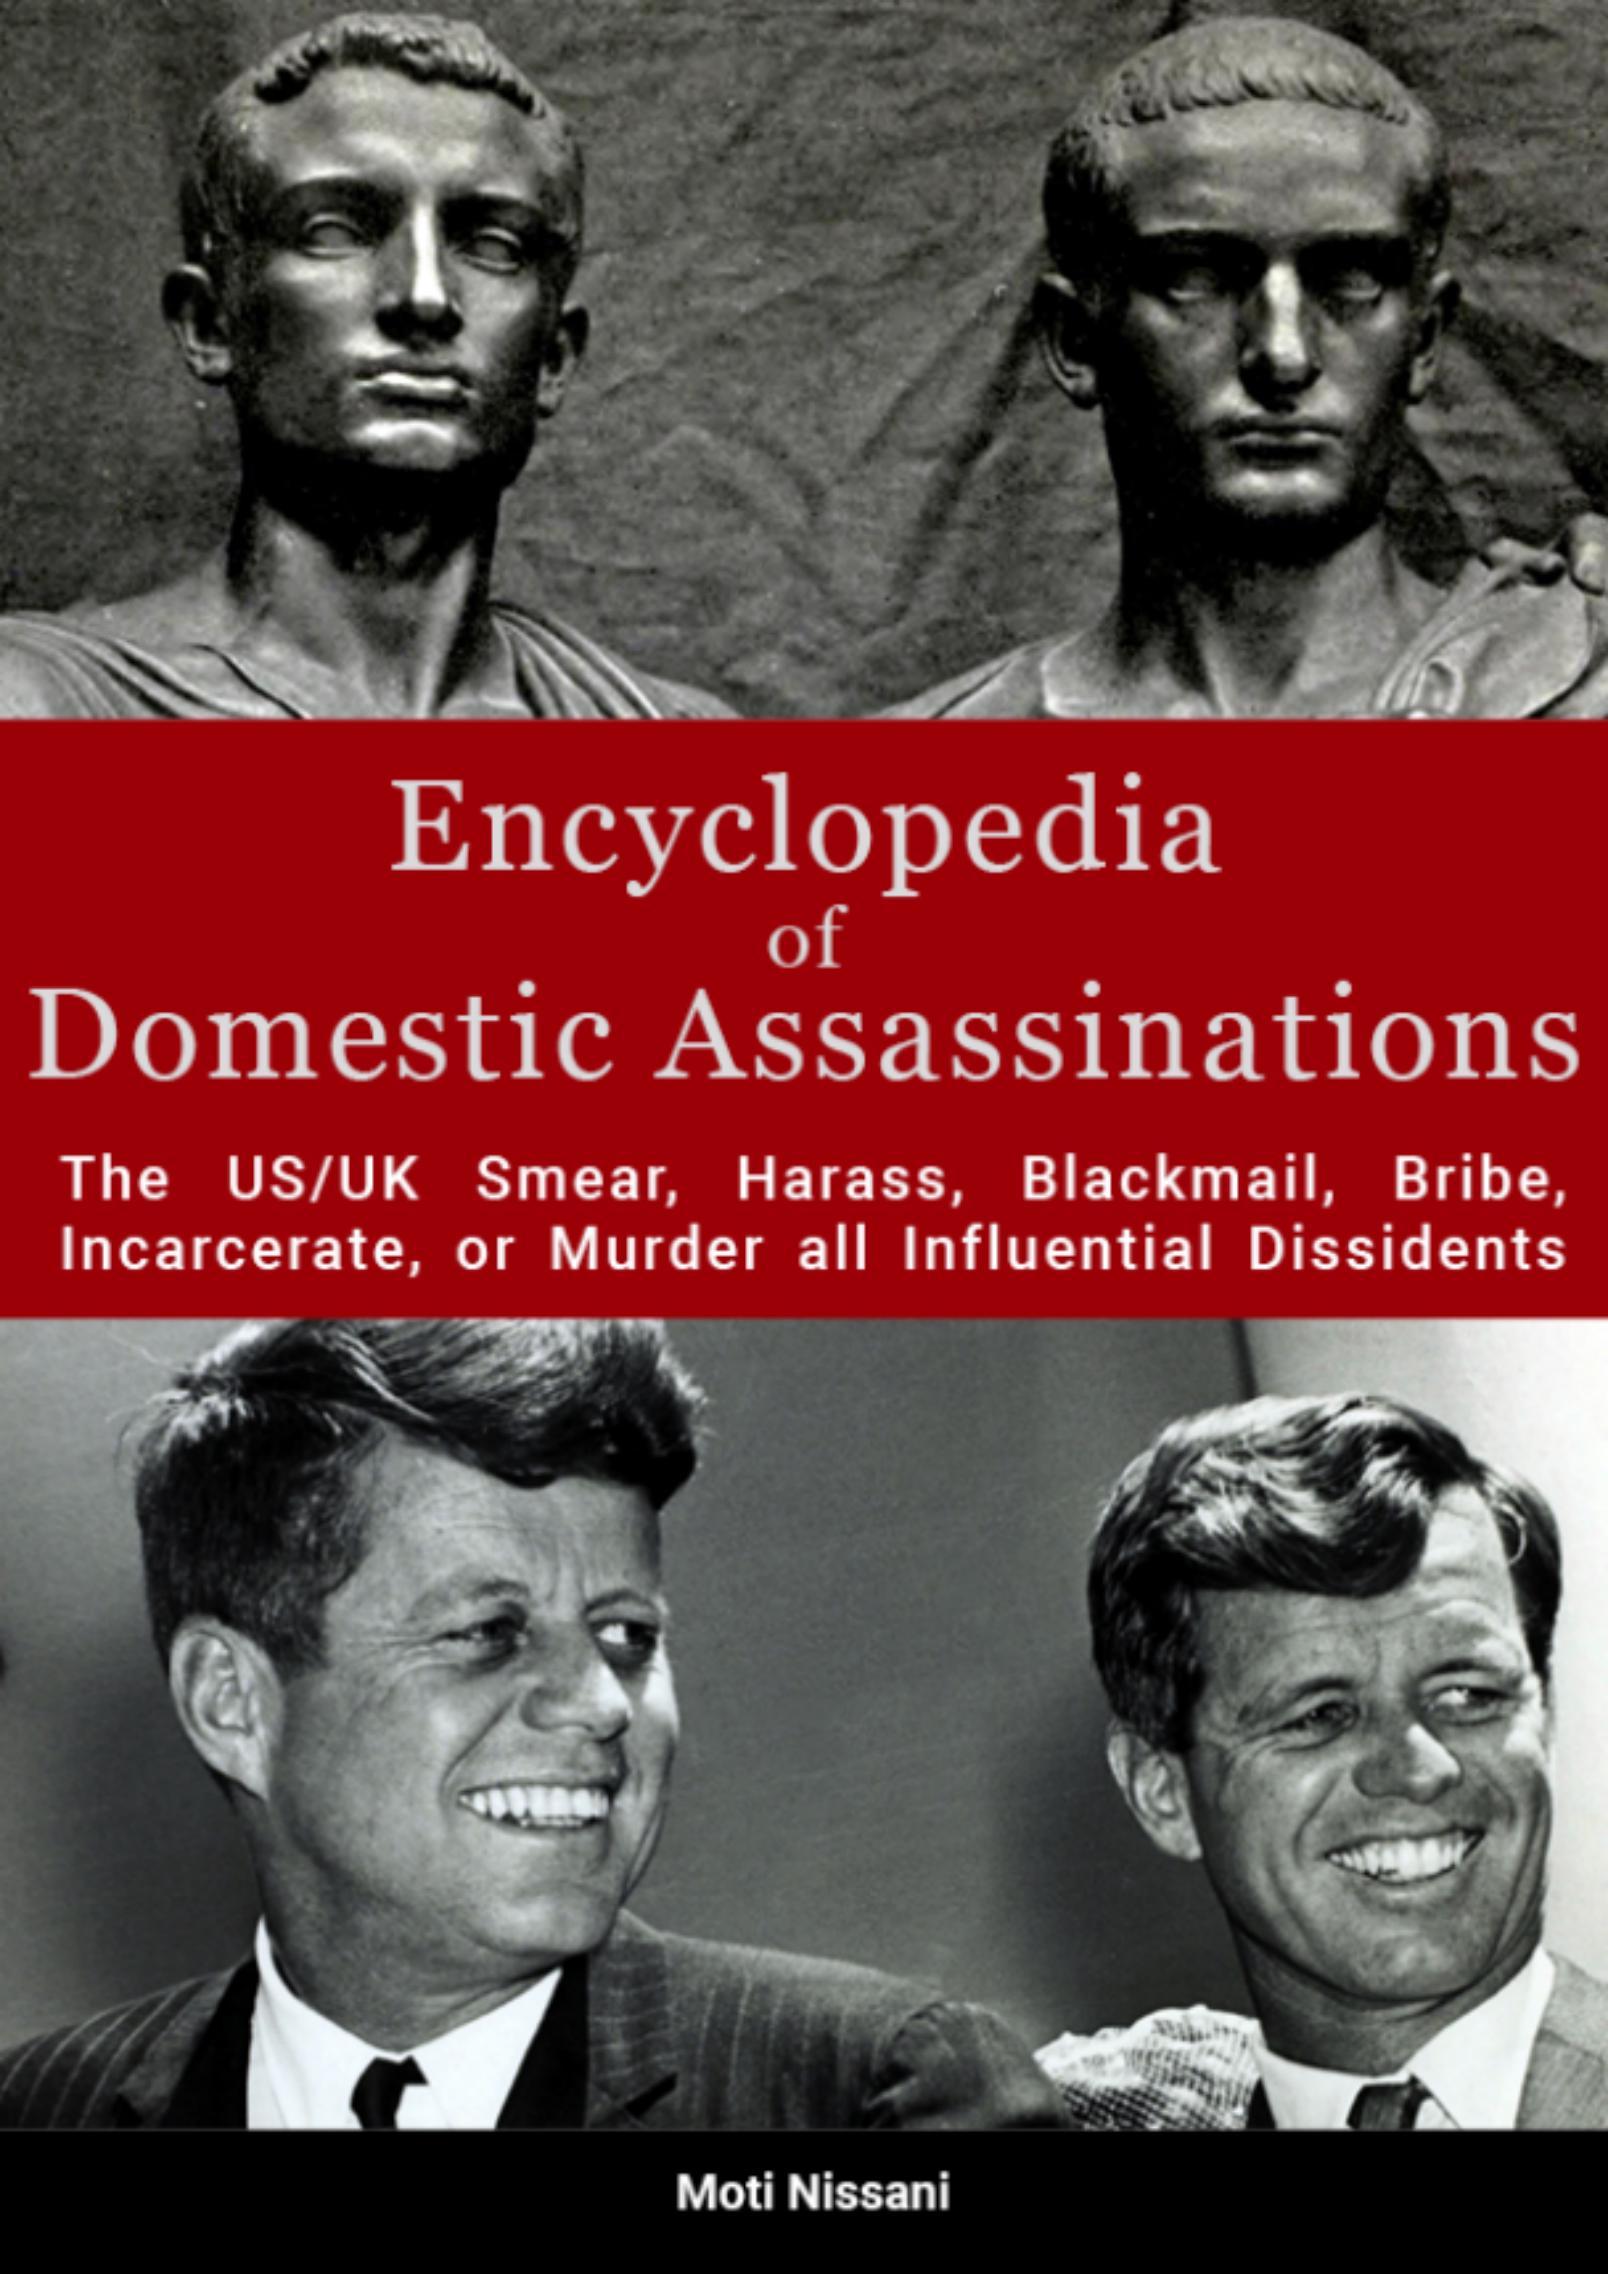 File:Encyclopedia of Domestic Assassinations.jpg